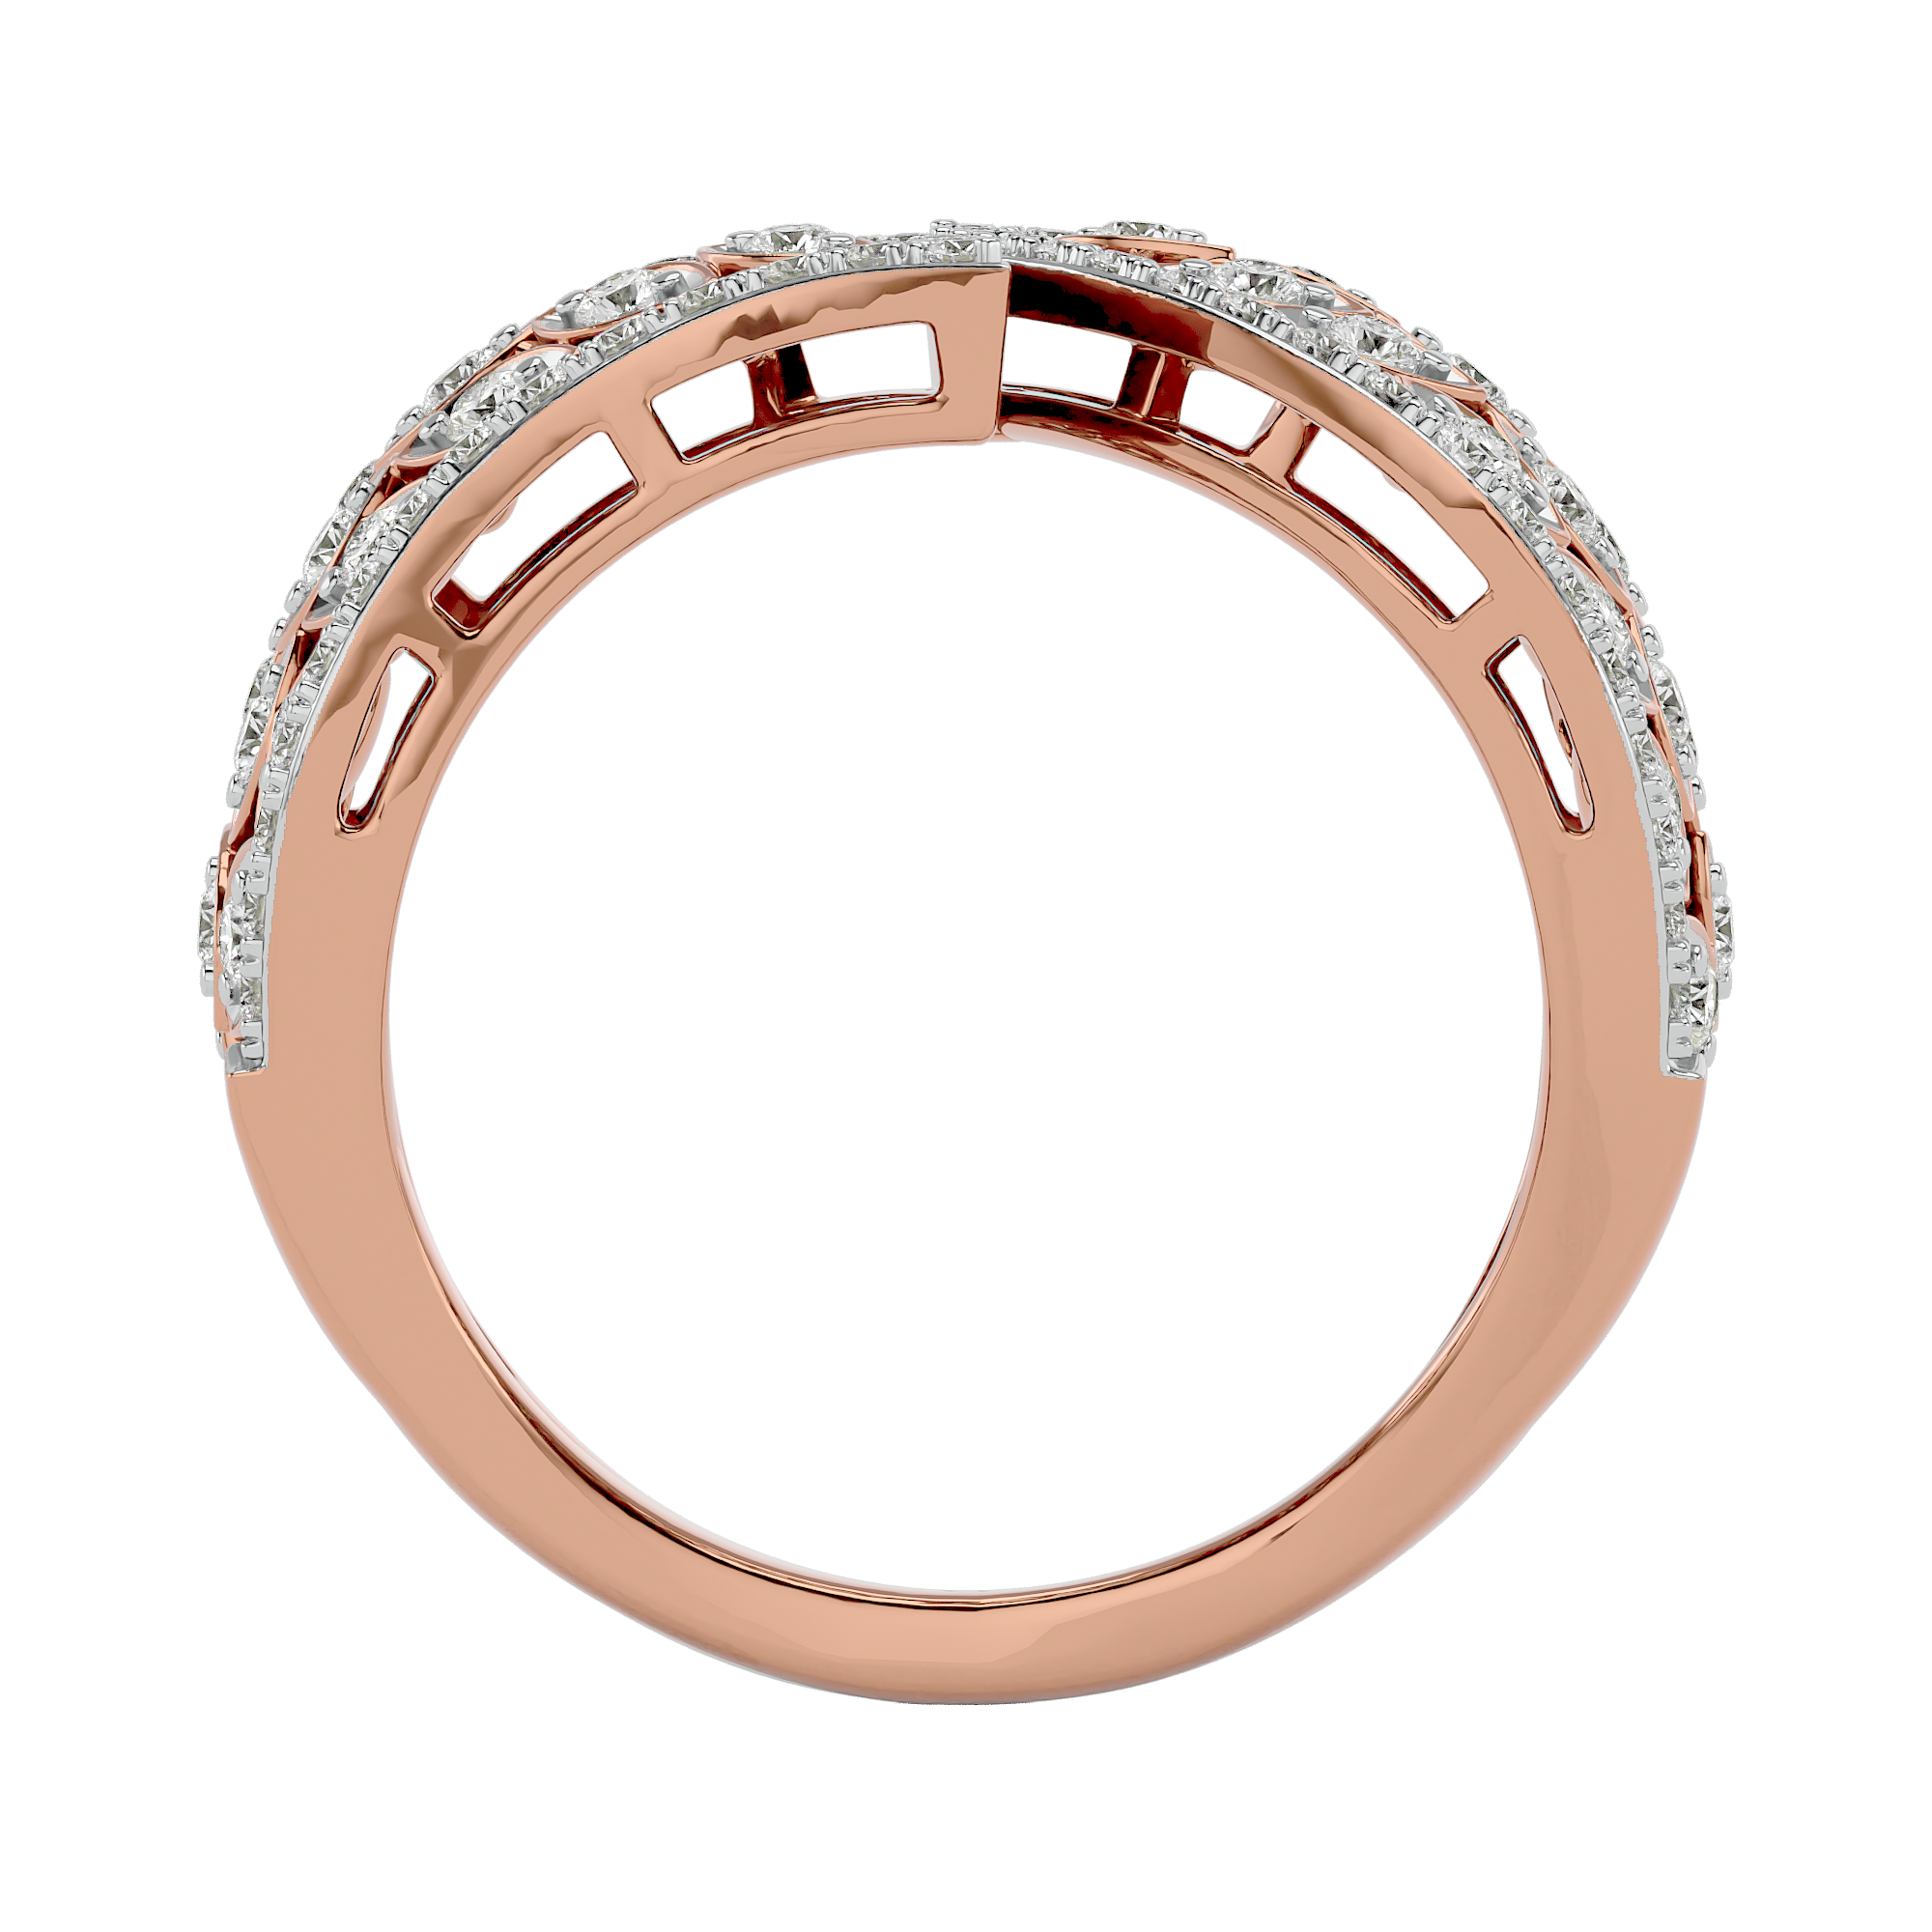 0.95 Carat Diamond Ring in Rose Gold - Blu Diamonds